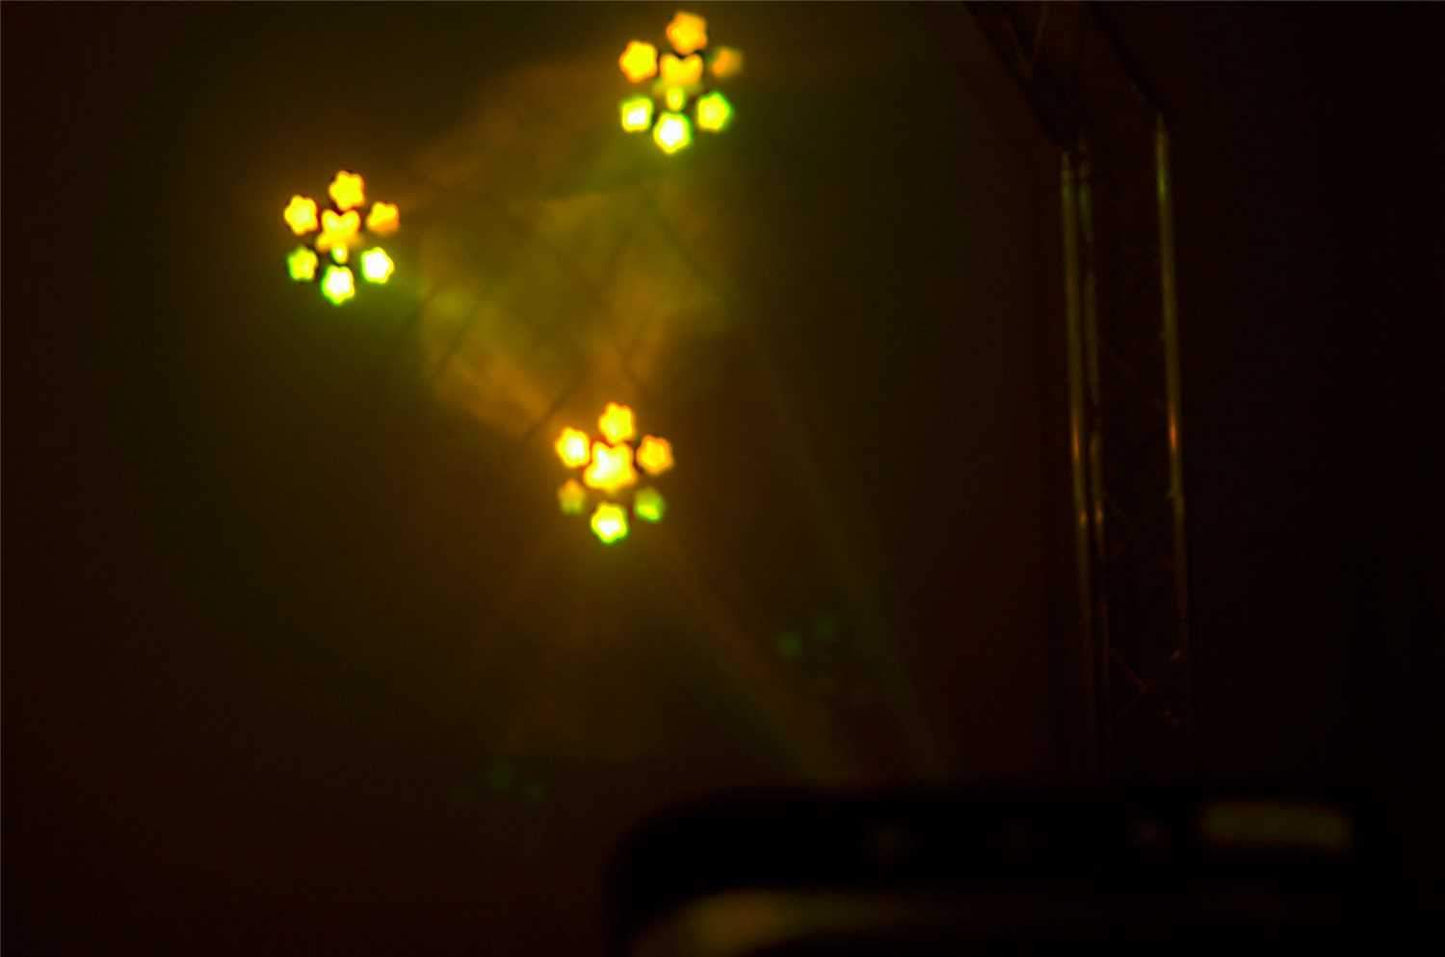 ColorKey Blaster 2R Laser Simulator Effect Light - ProSound and Stage Lighting